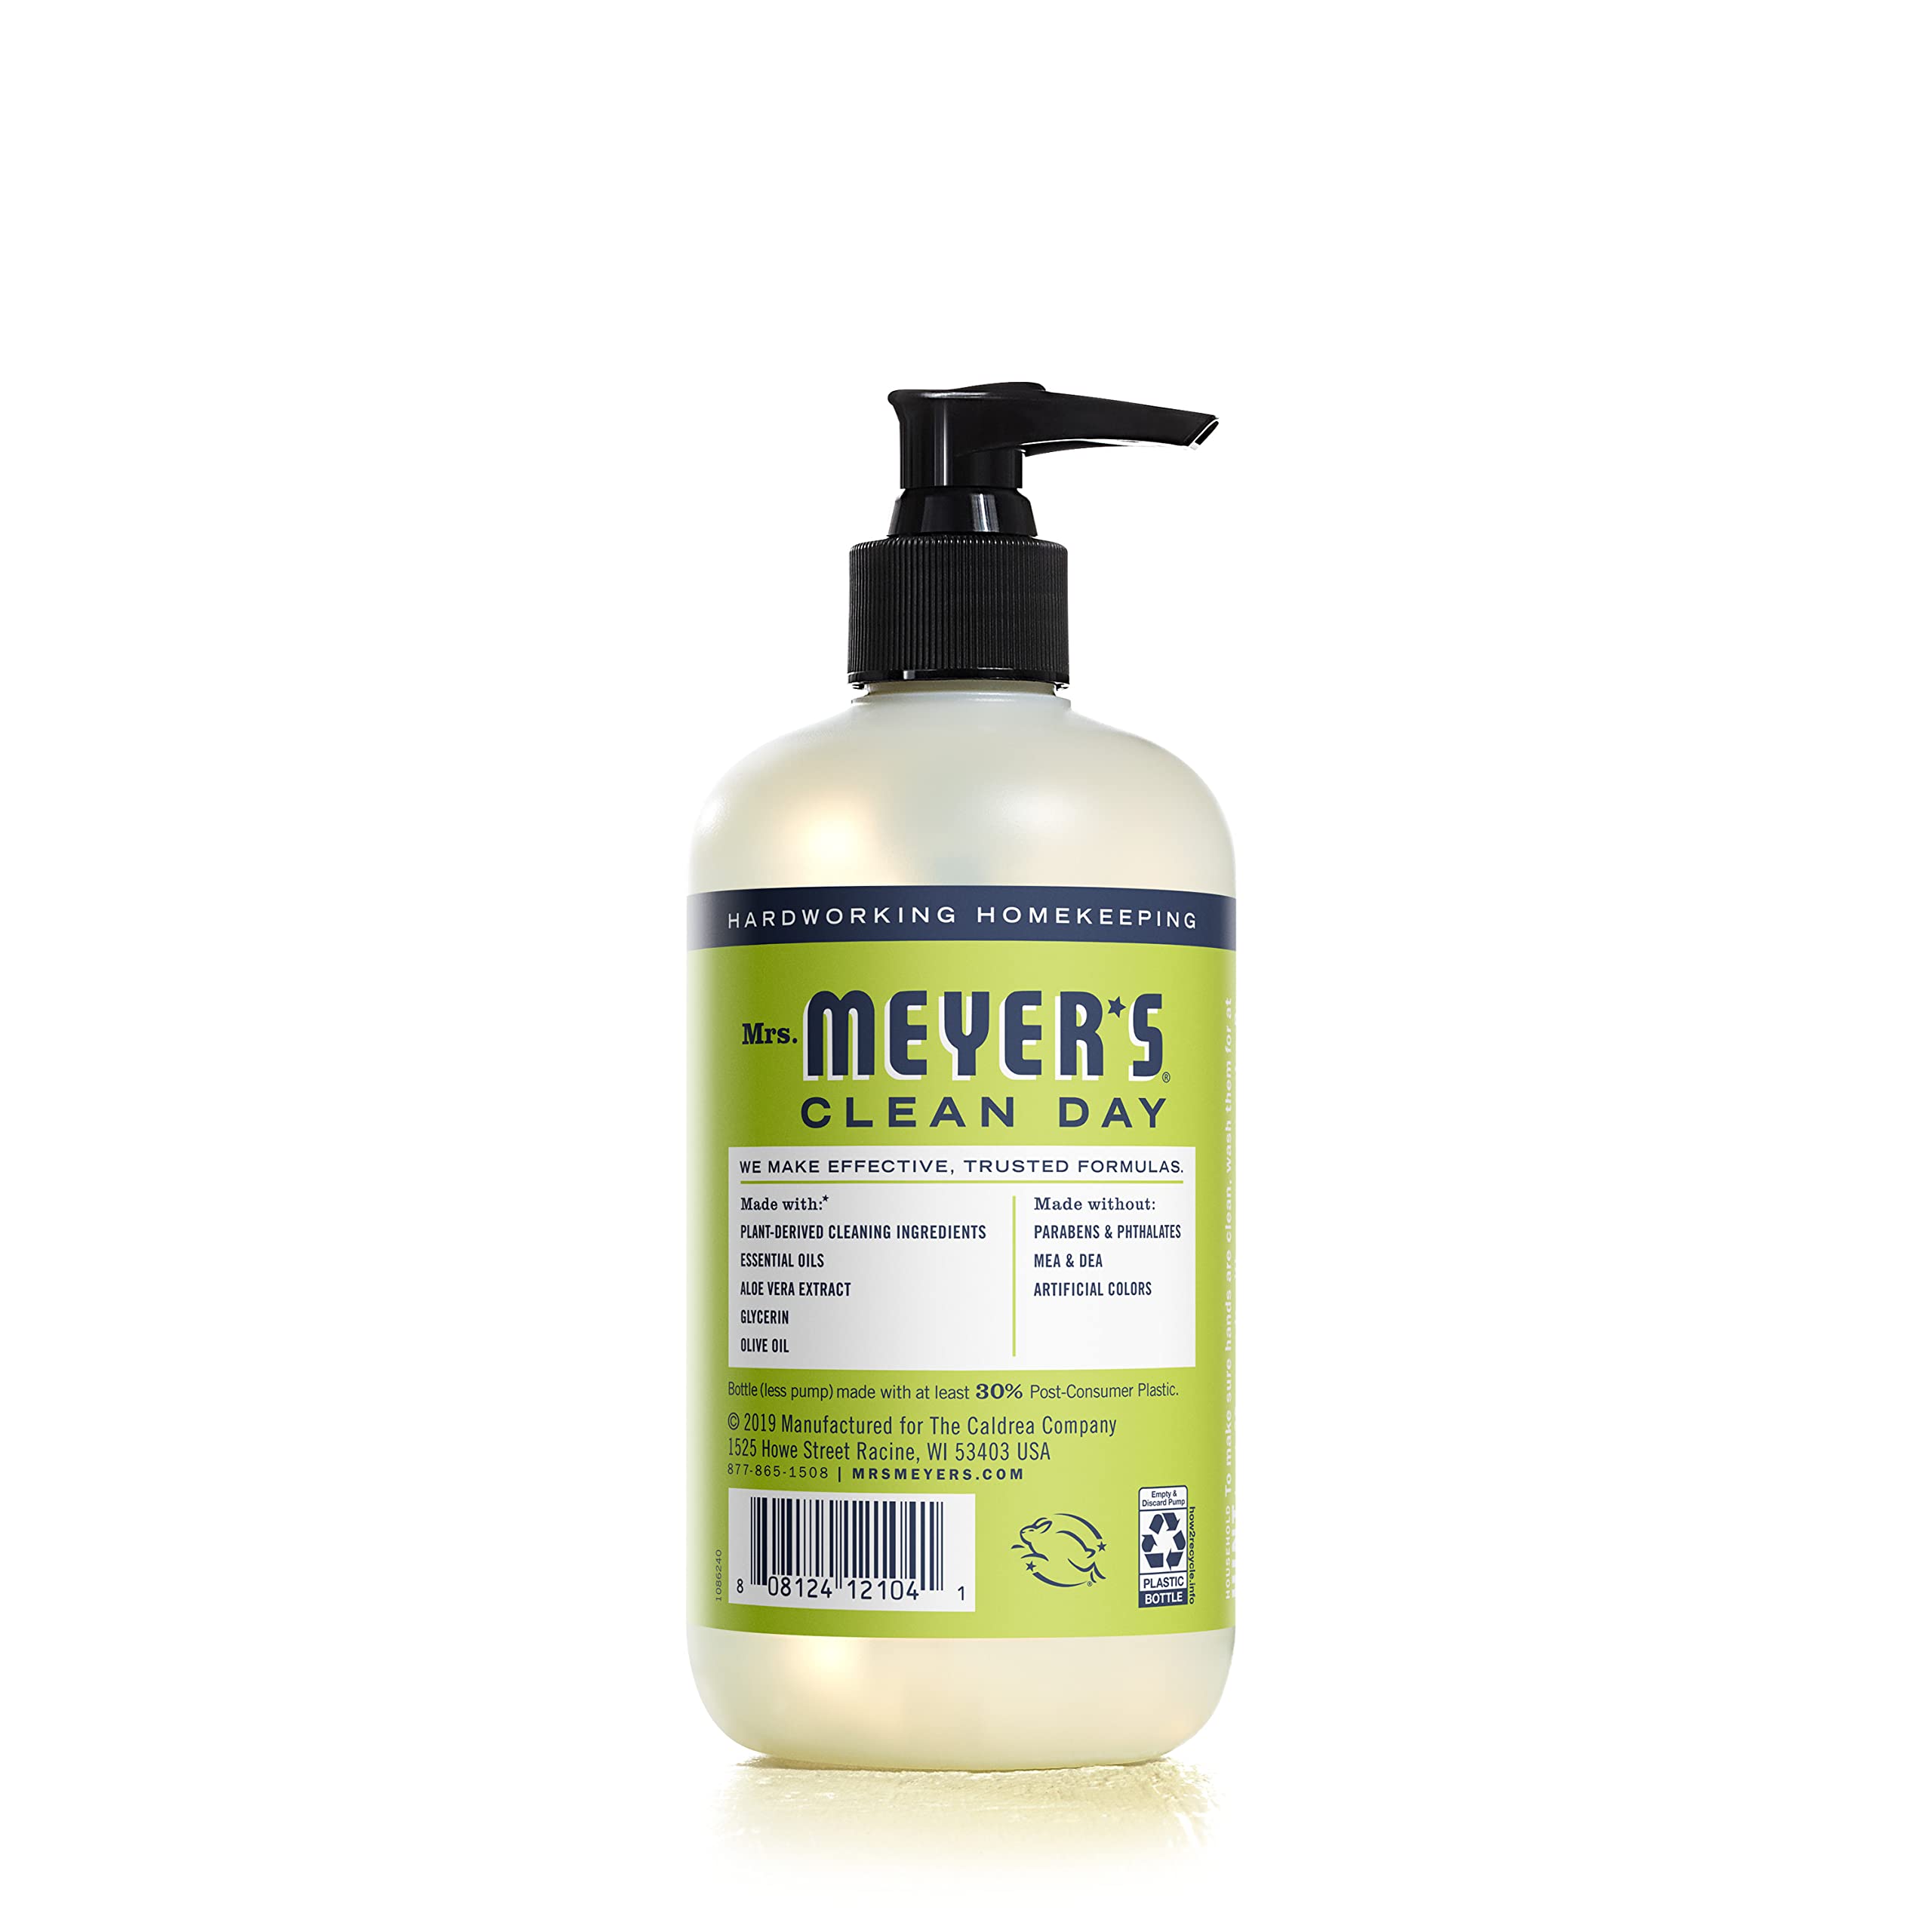 Mrs. Meyer's Hand Soap, Made with Essential Oils, Biodegradable Formula, Lemon Verbena, 12.5 fl. oz